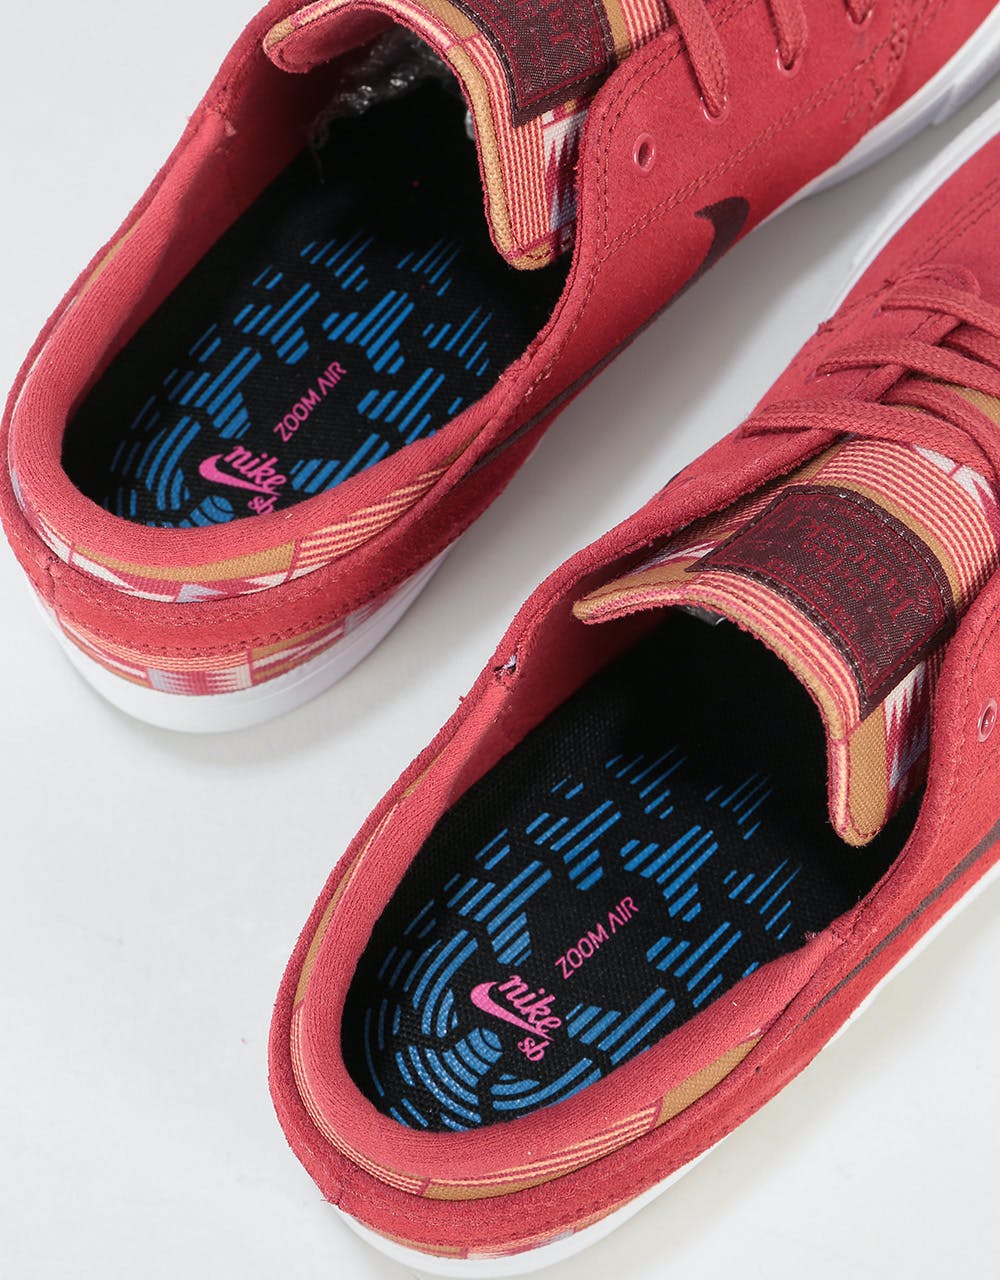 Nike SB Zoom Janoski RM Premium Skate Shoes - Cedar/Mahogany-Multi